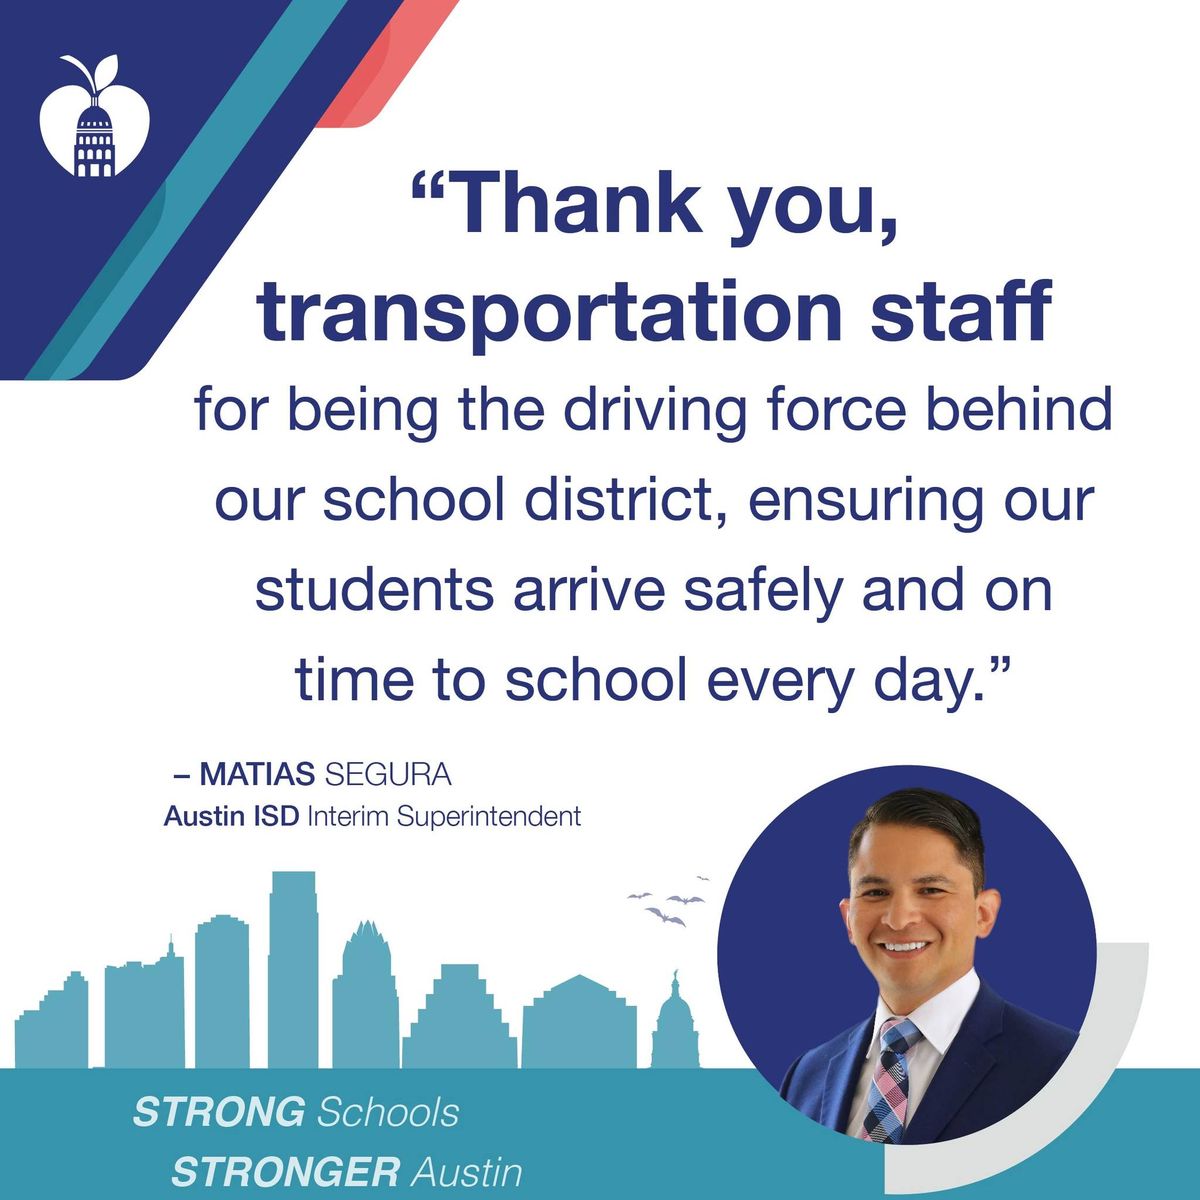 Thank you transportation staff